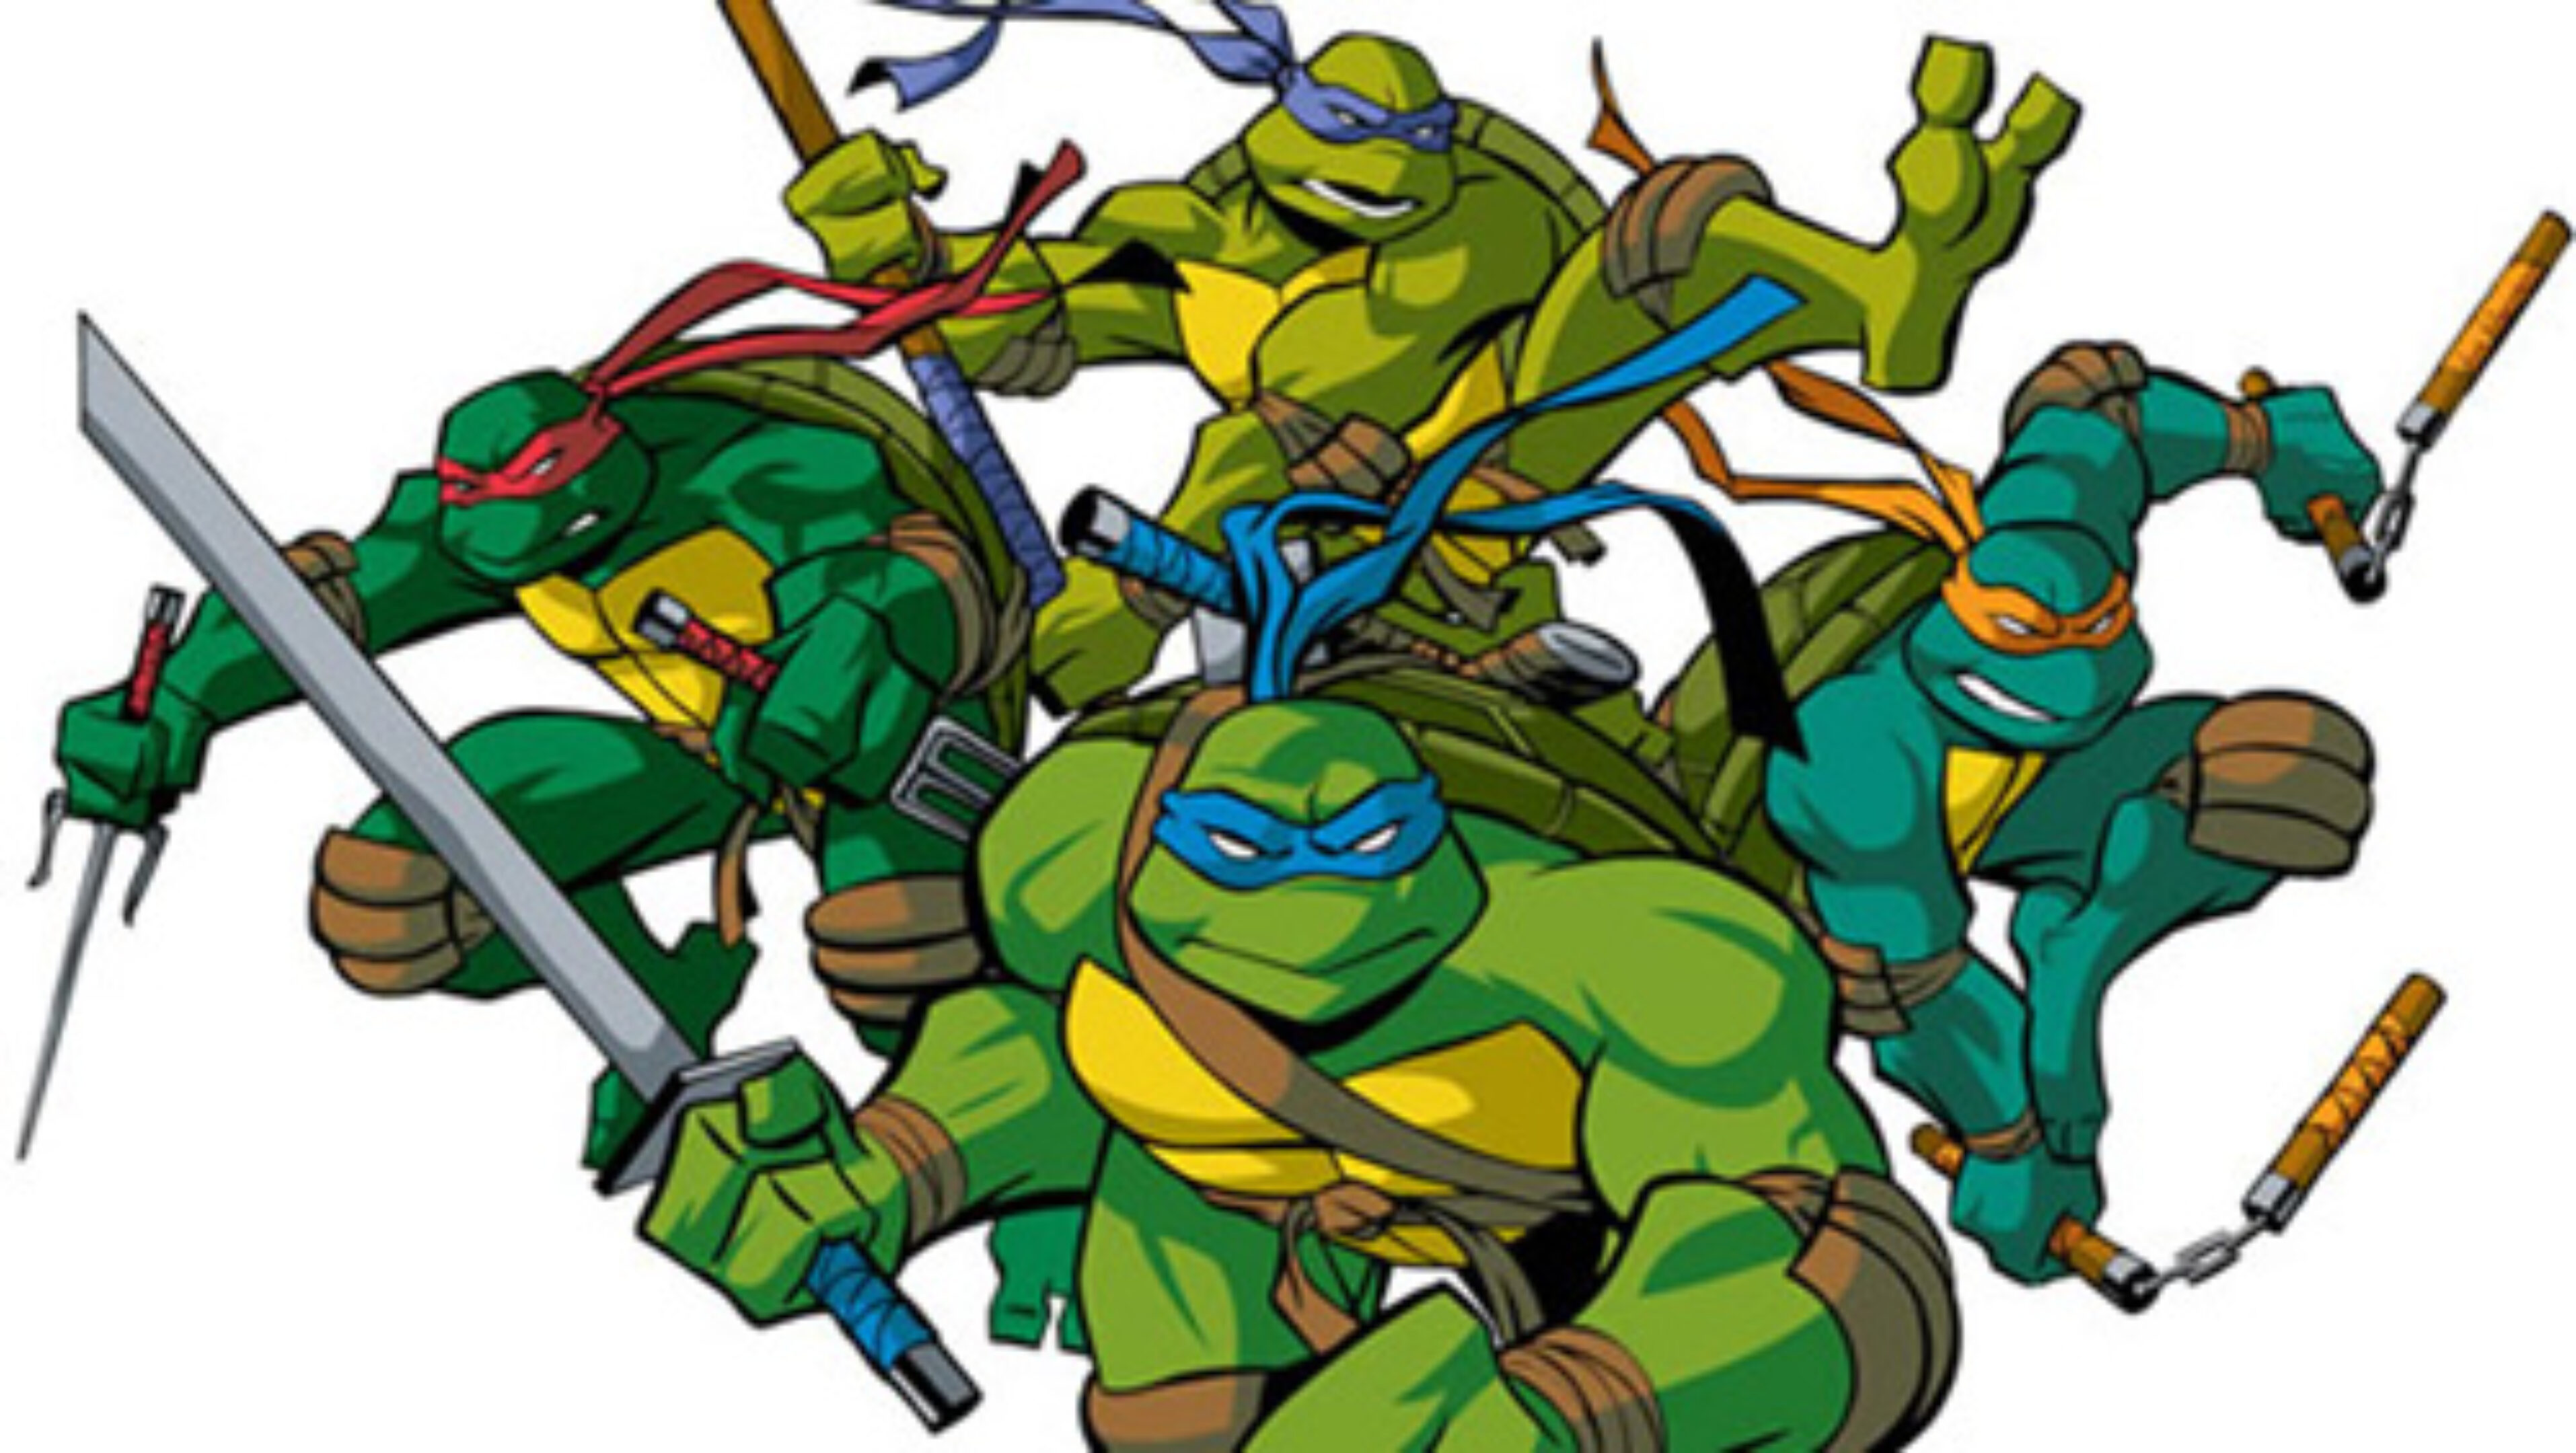 10 Ways To Revitalize The Teenage Mutant Ninja Turtles Franchise